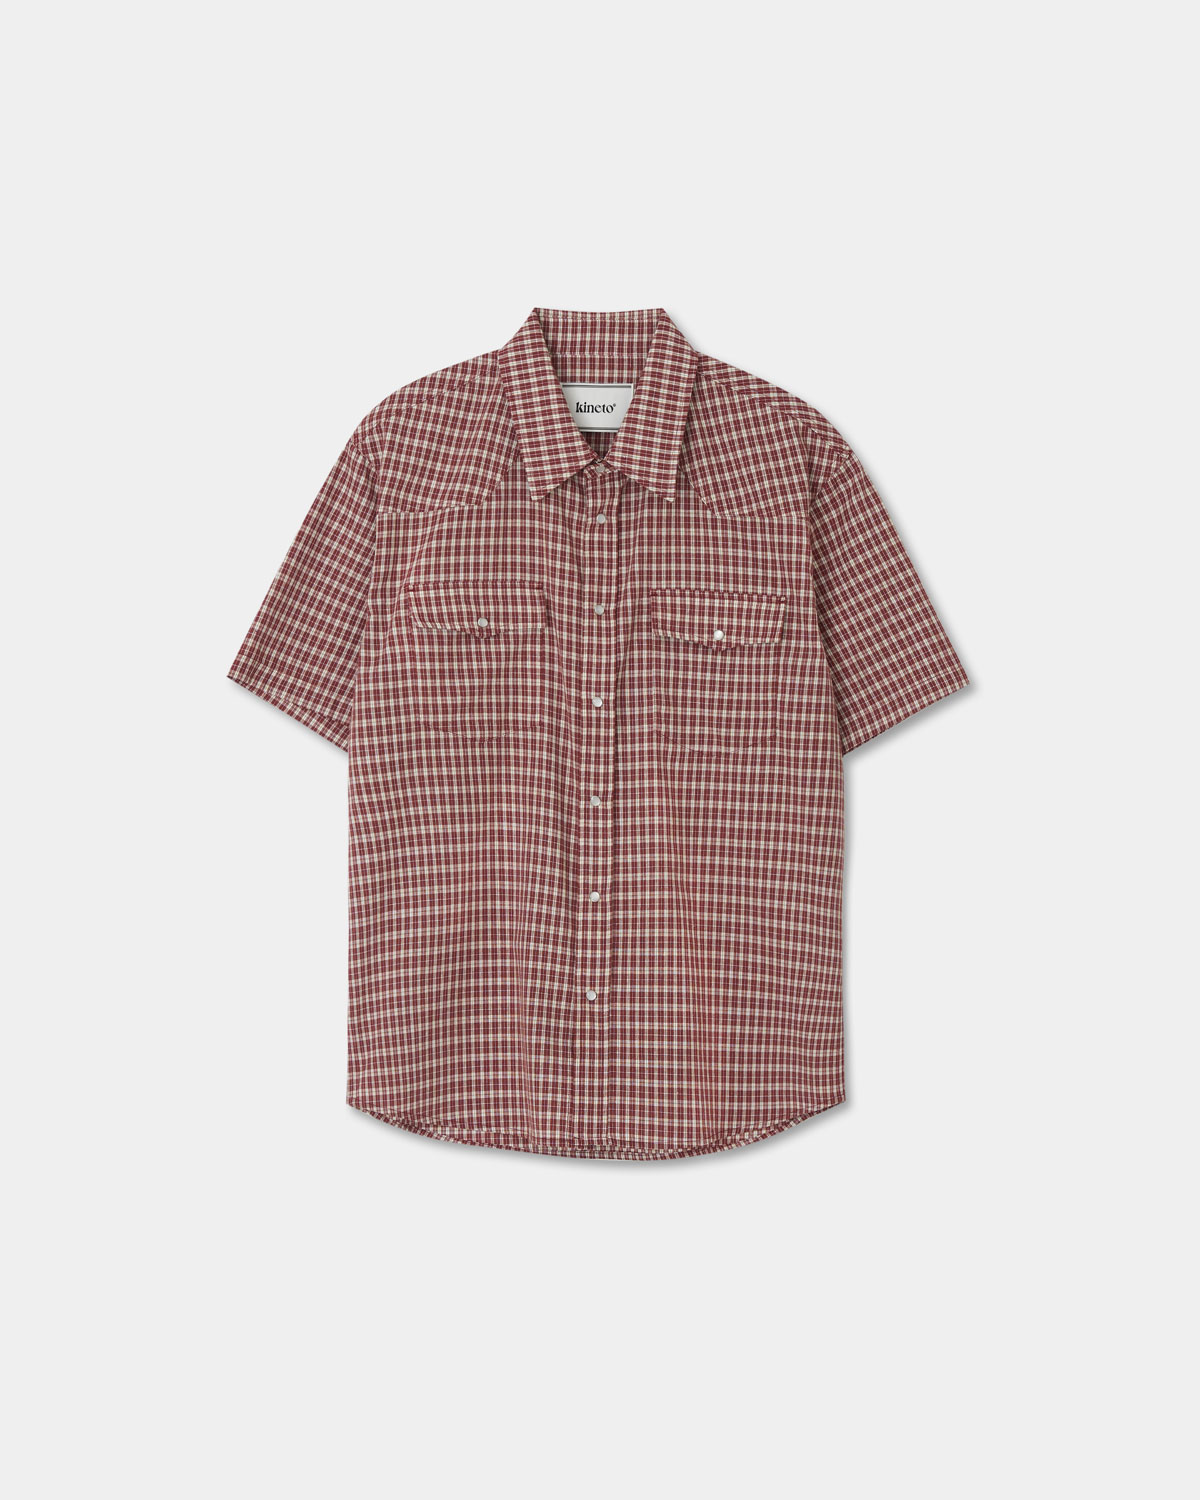 Western Checked Pattern Shirt_Burgundy_W_예약 배송 05/17